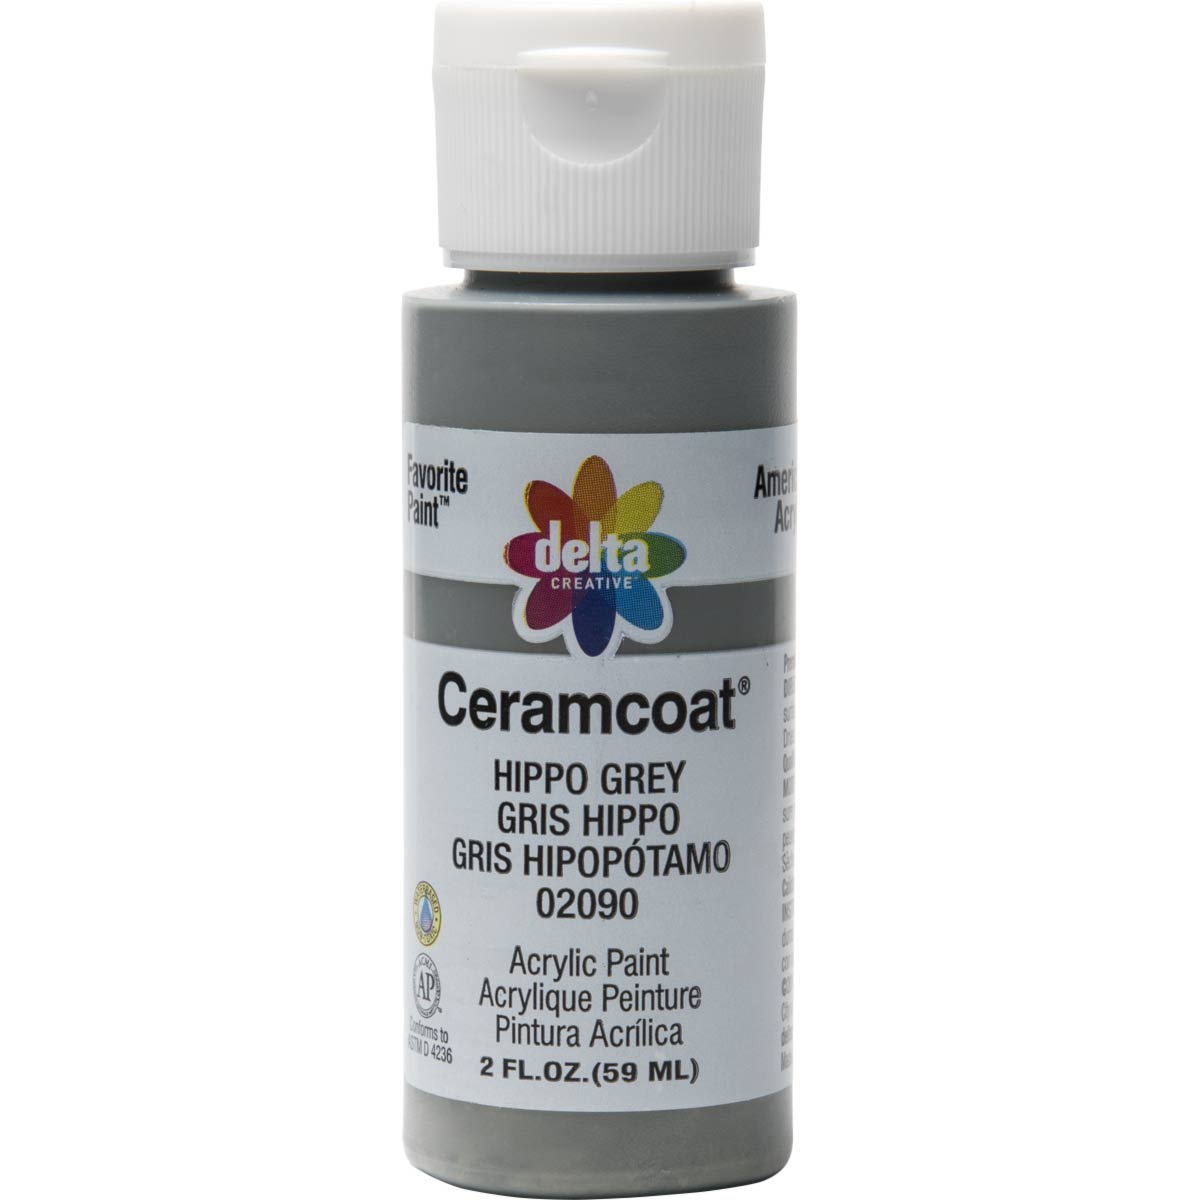 Delta Ceramcoat Acrylic Paint - Hippo Grey, 2 oz. - 020900202W